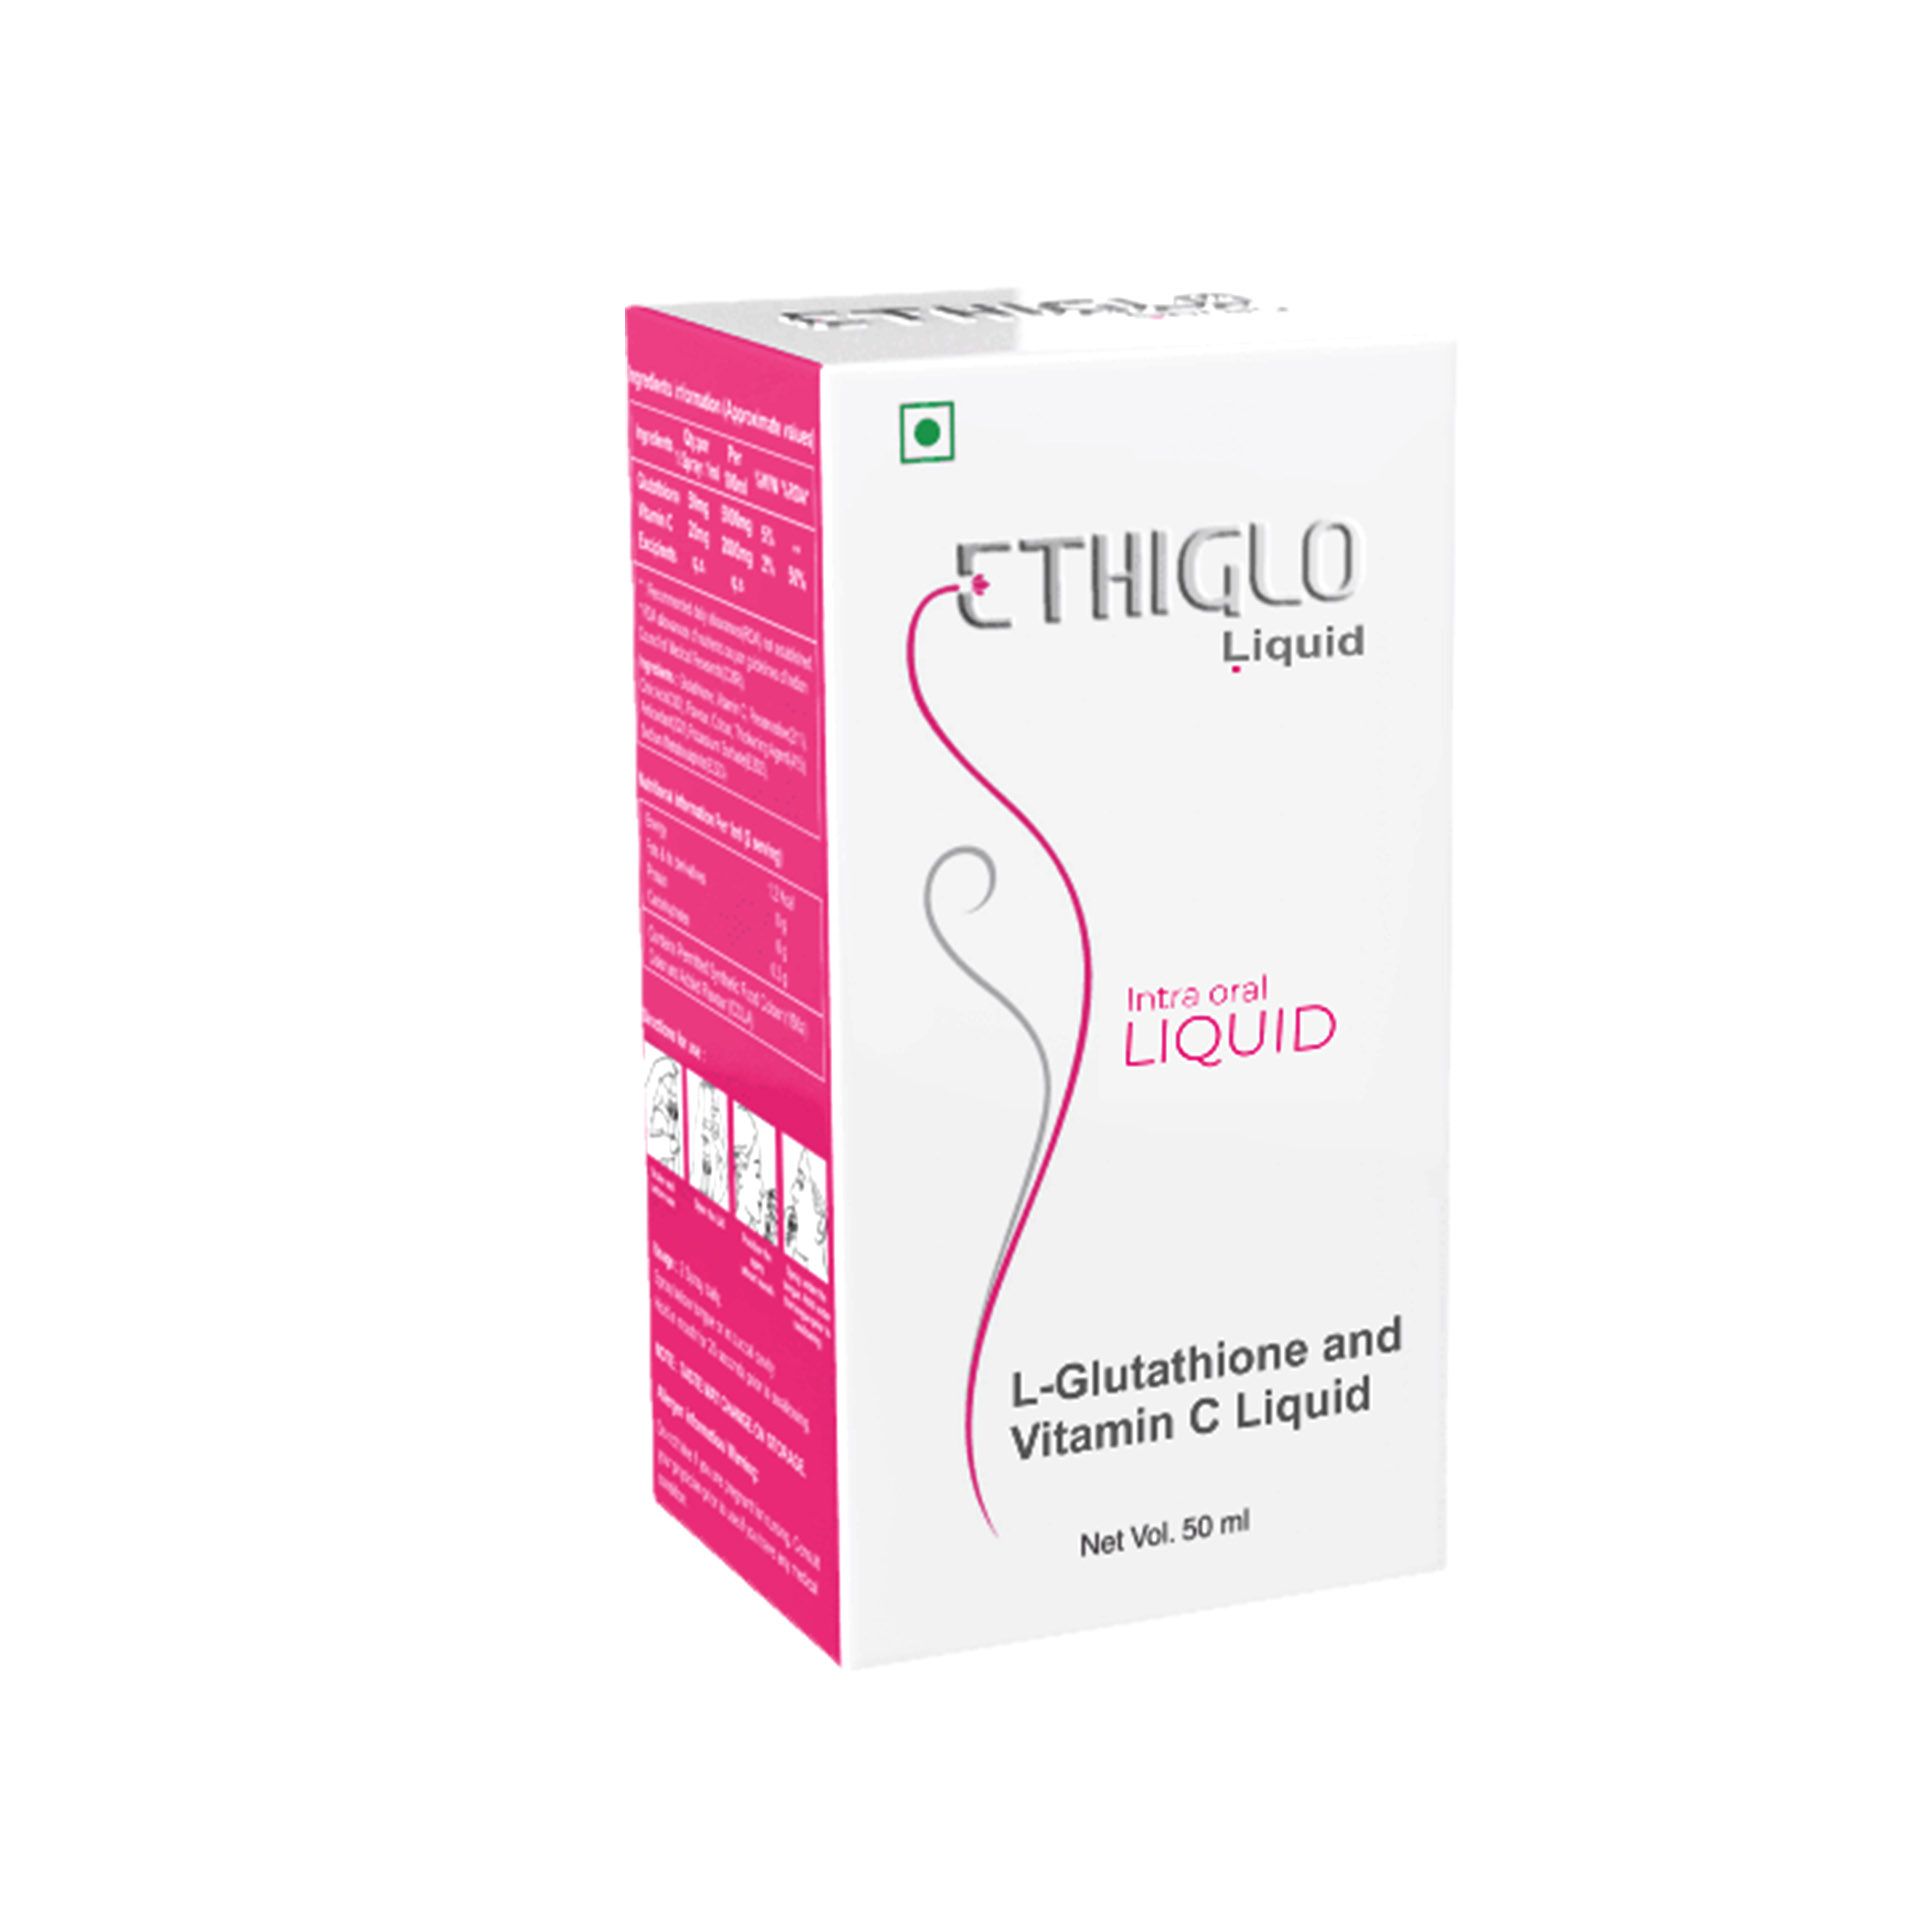 Ethiglo Liquid 50ml Spray